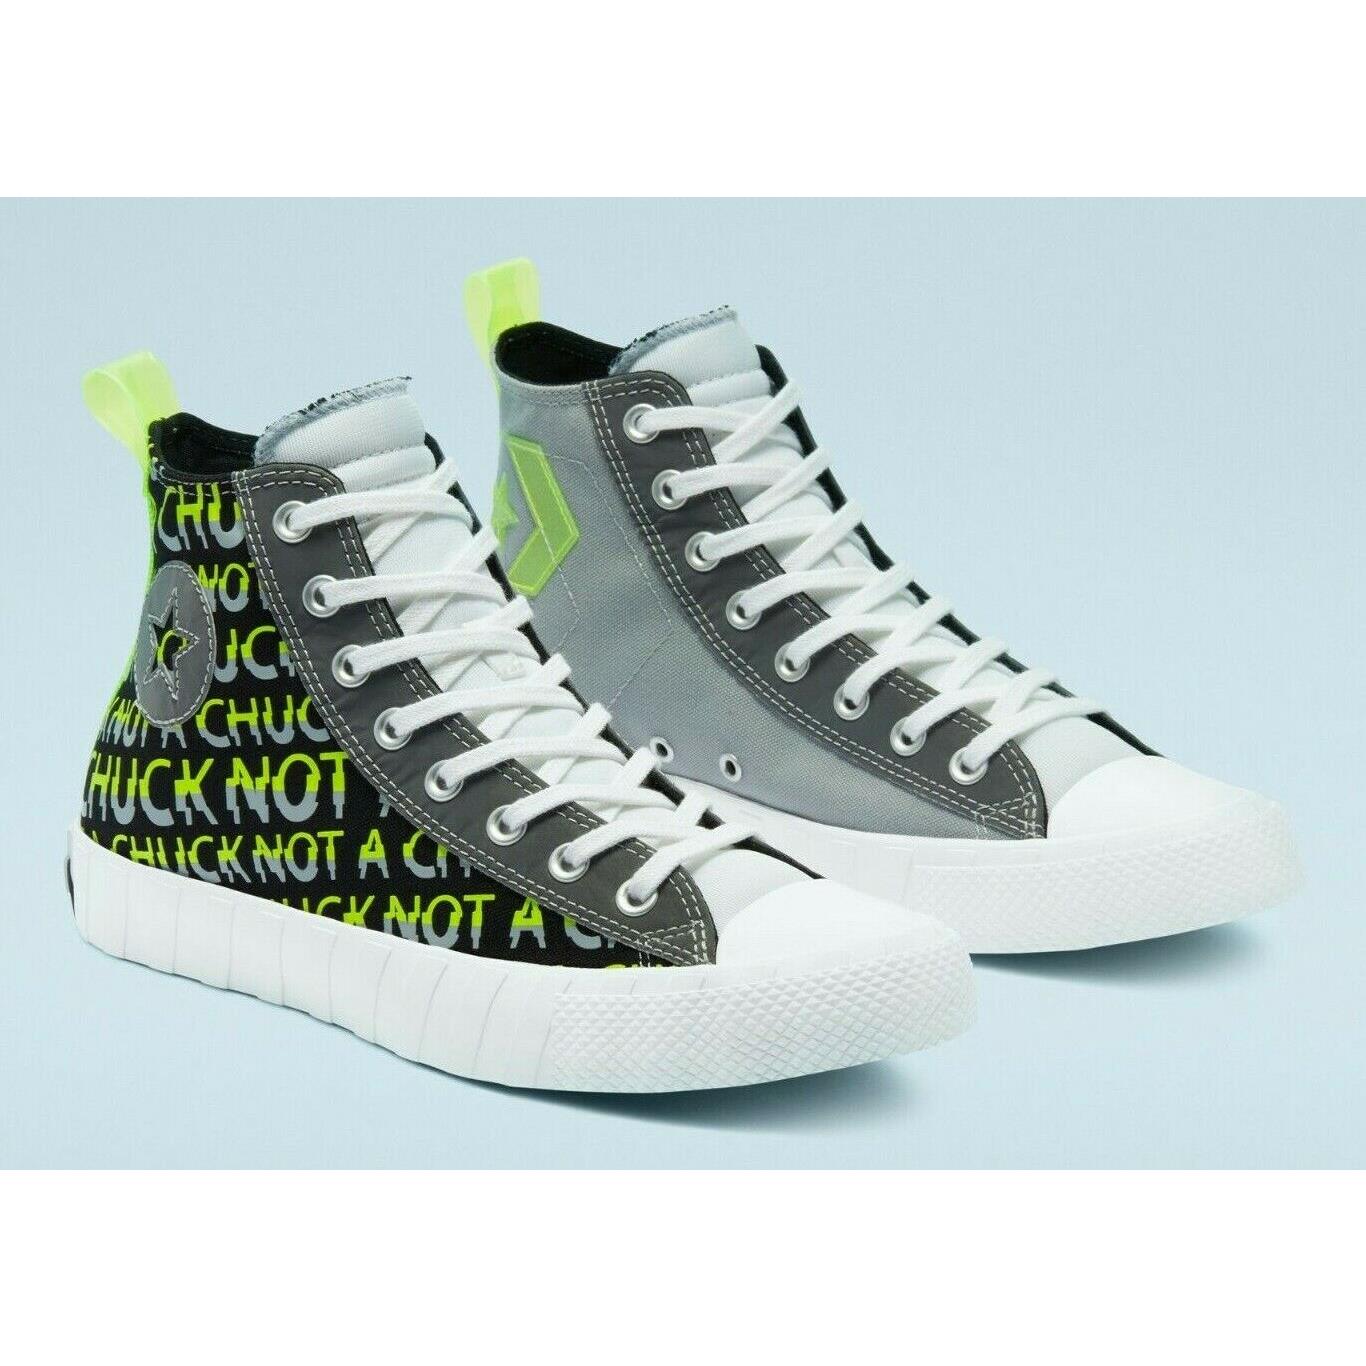 Converse Chuck Taylor Hi-vis UNT1TL3D Hi Top Shoes 169675C Multi Sizes Black/as